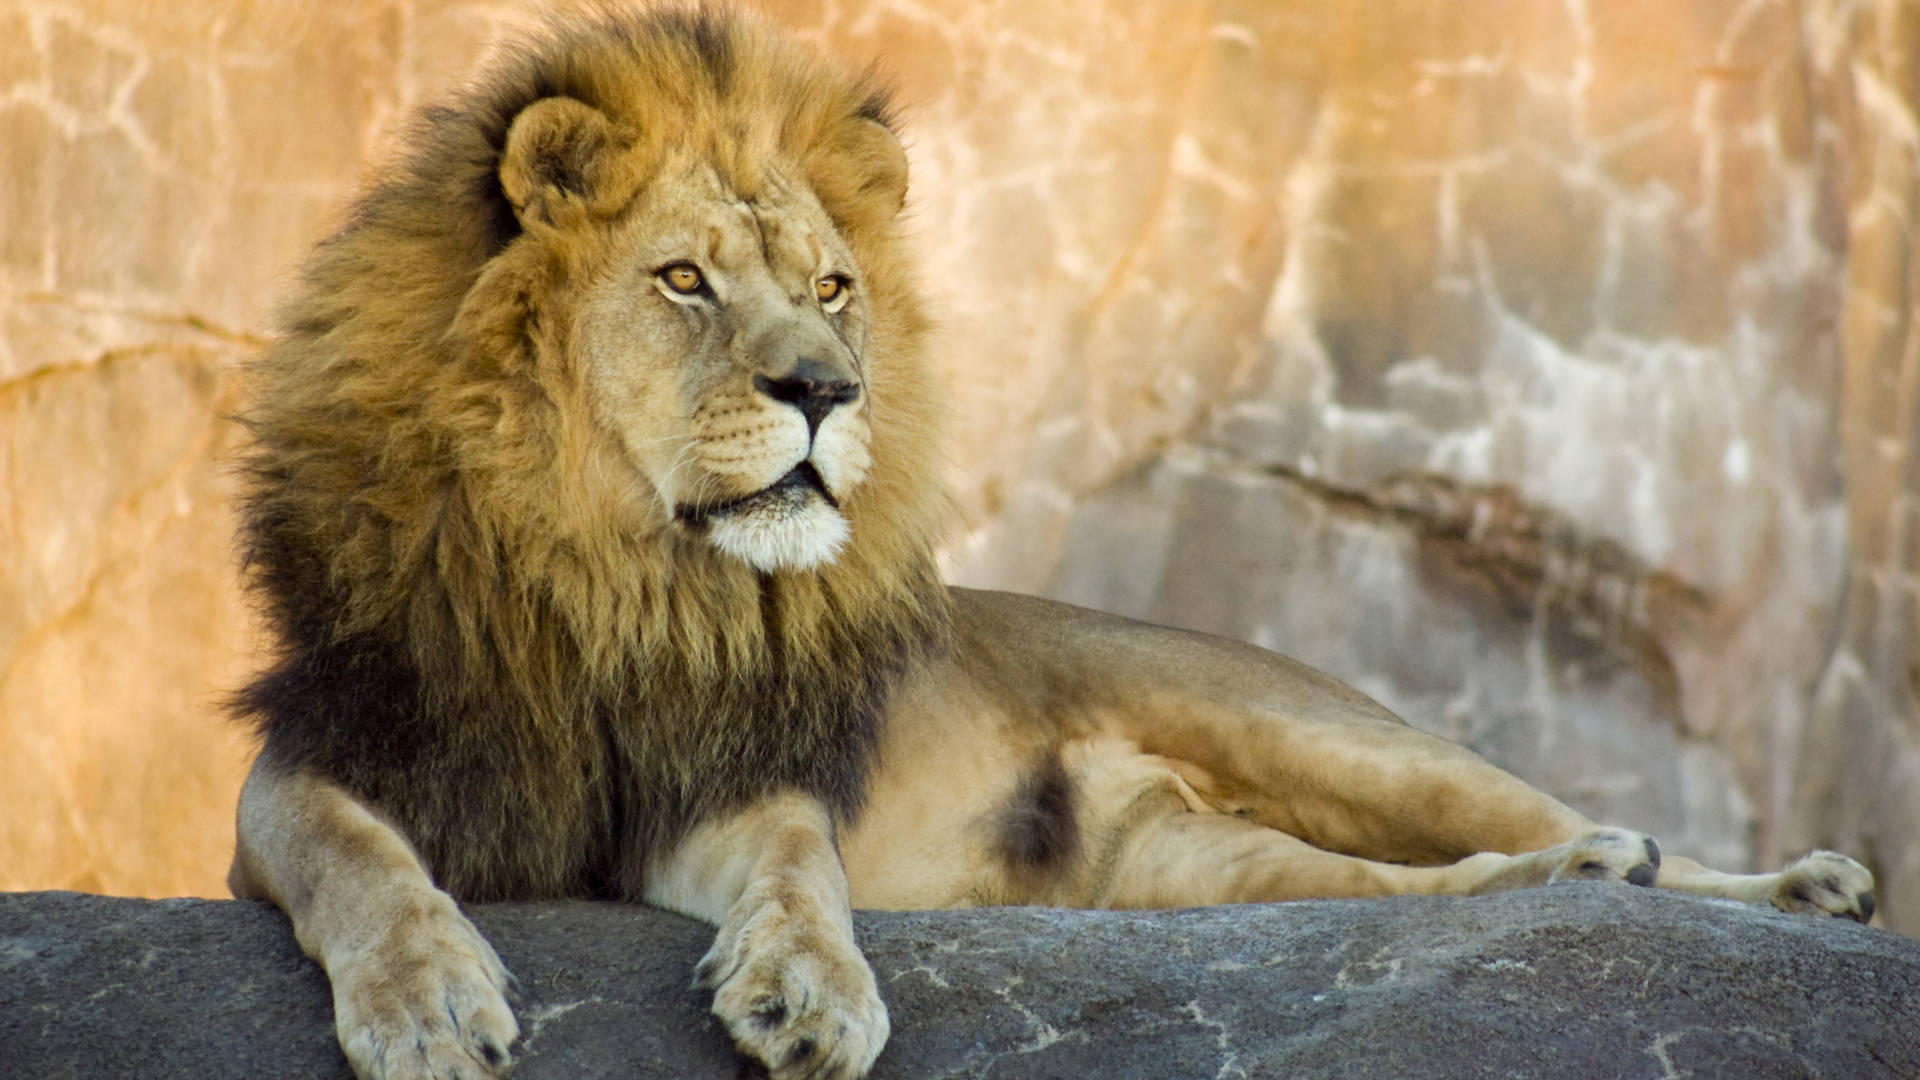 Lion at Kuwait Zoo